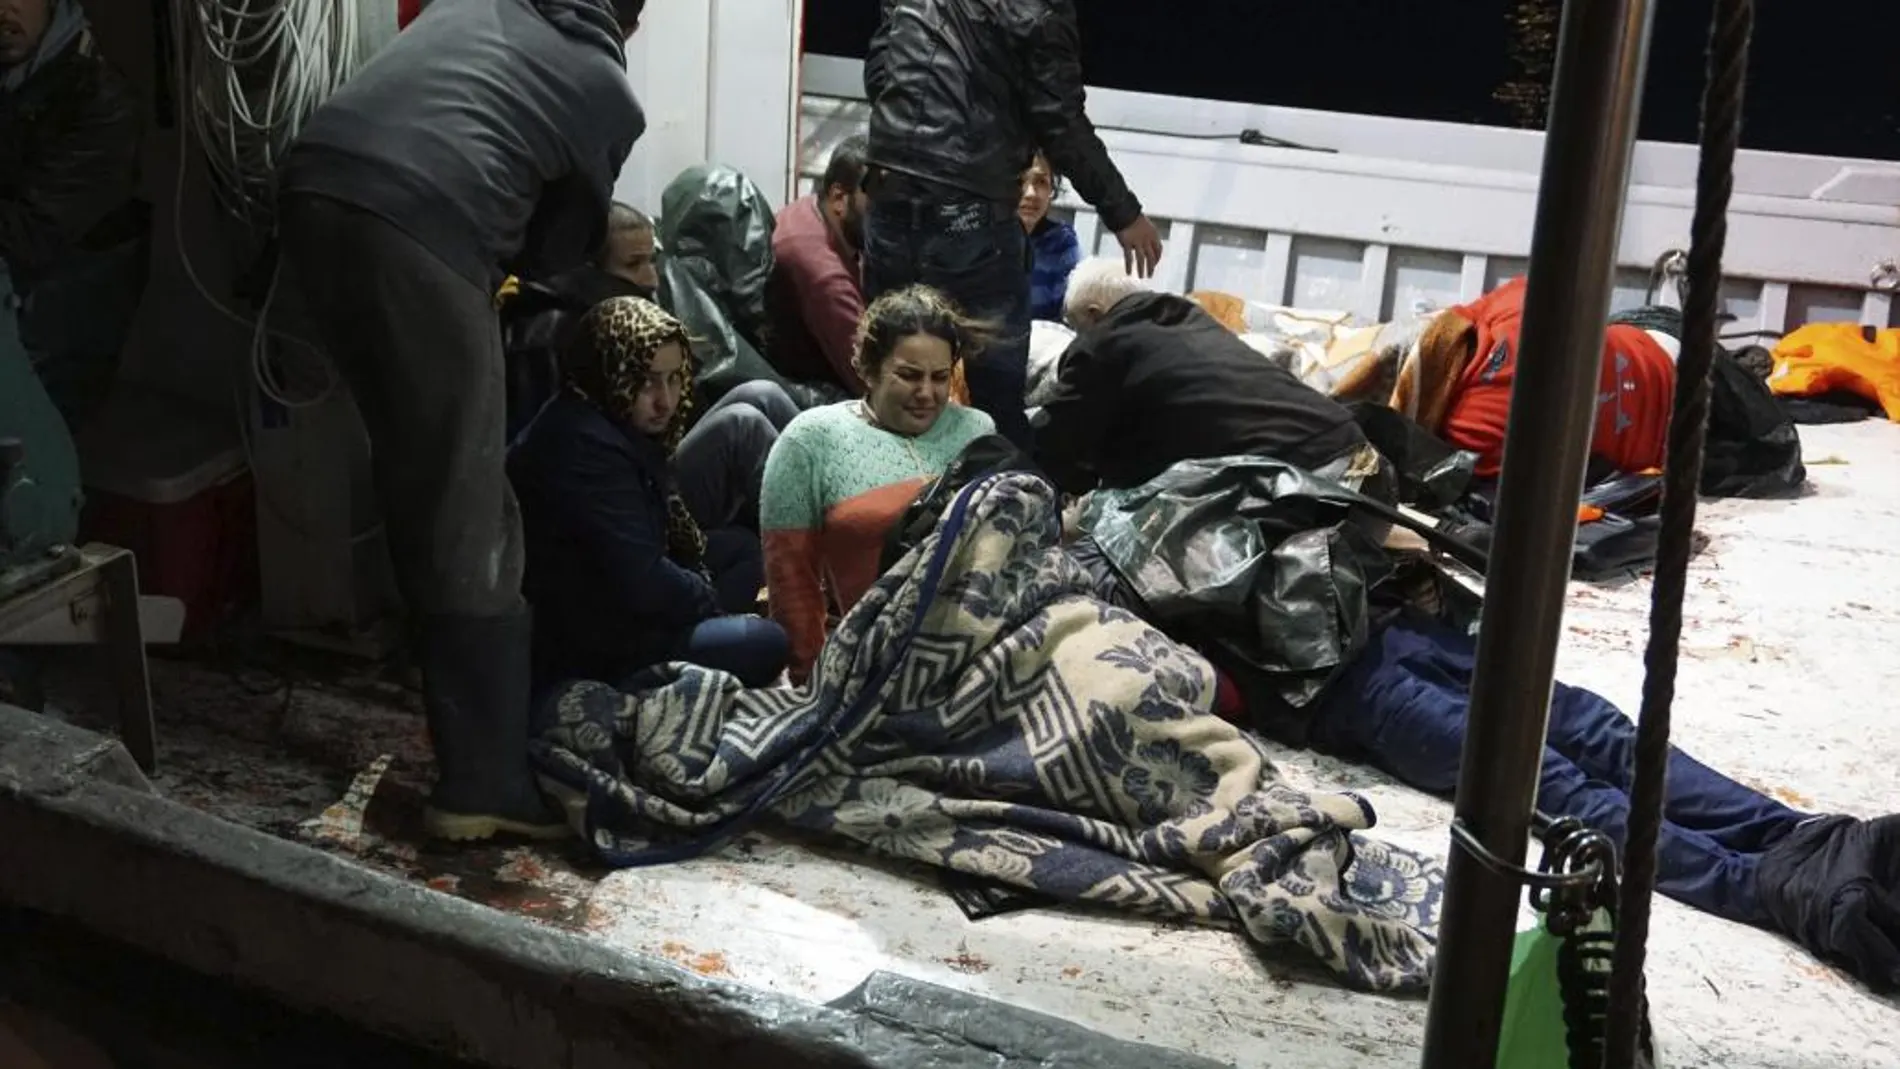 Vista de la llegada de un grupo de inmigrantes al puerto de Mytilini, isla de Lesbos